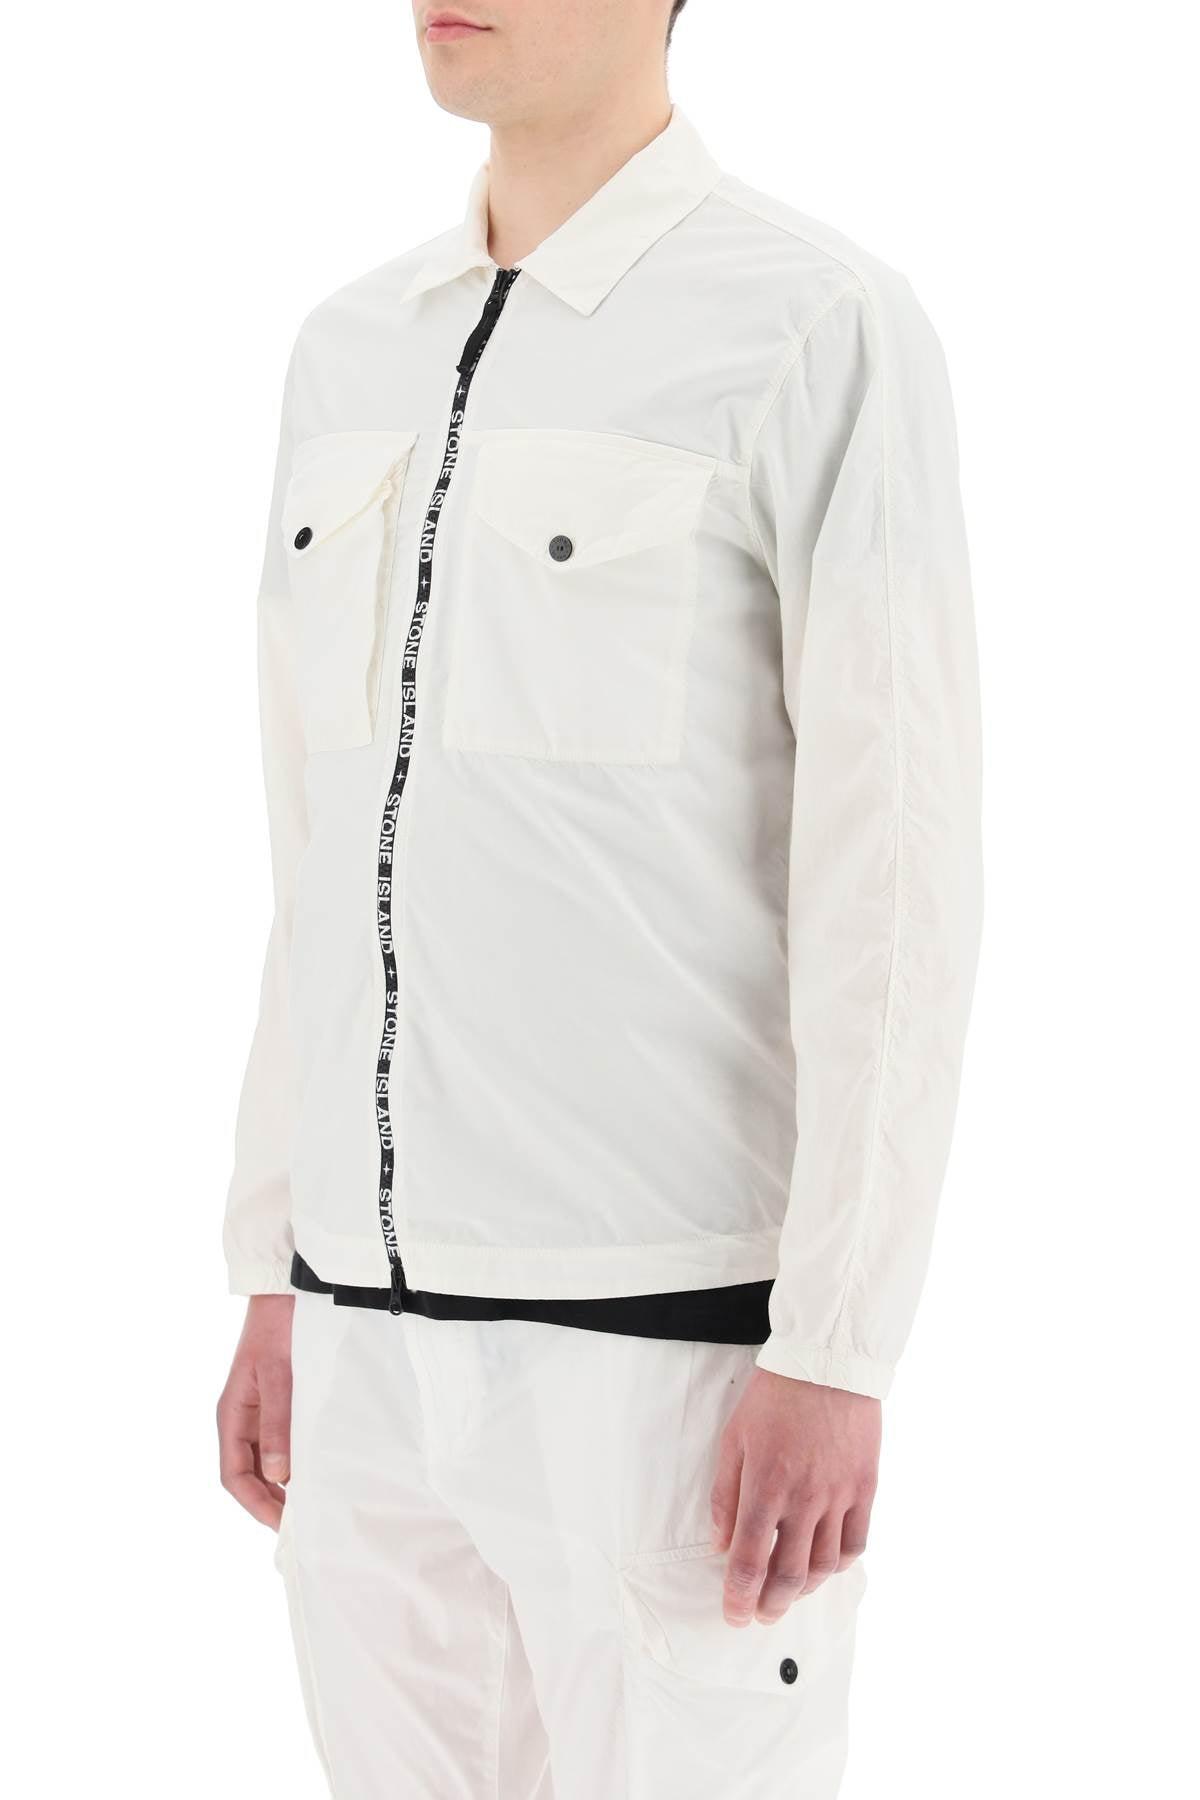 Stone Island Monogram Zip Shirt in White for Men | Lyst